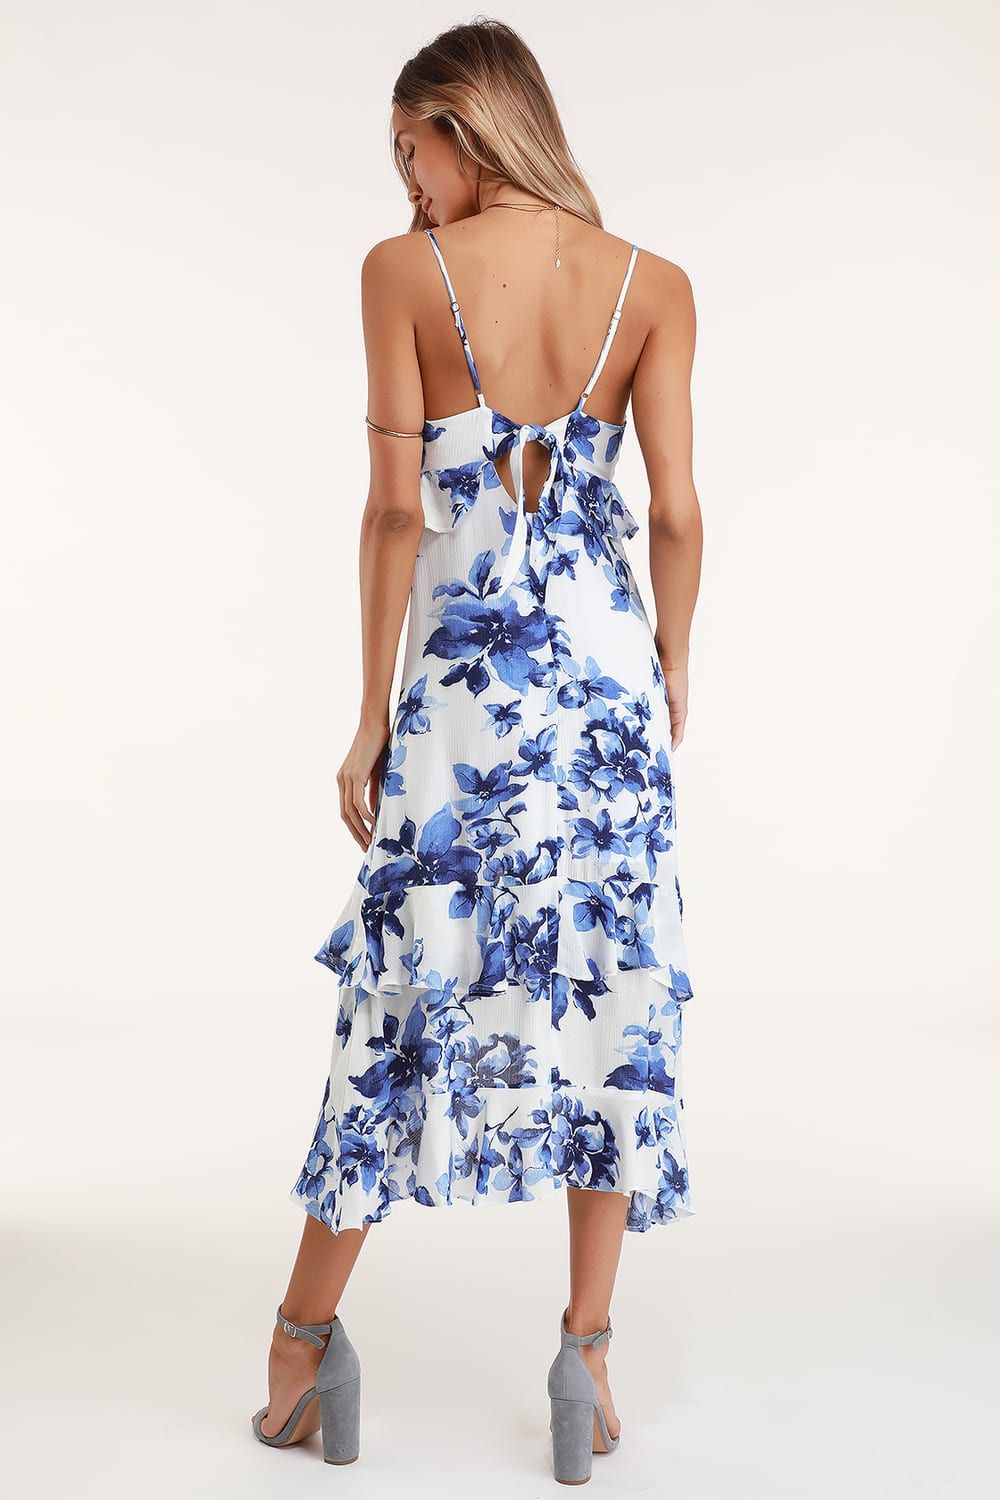 Island Time Blue and White Floral Print Ruffled Midi Dress | Lulus (US)